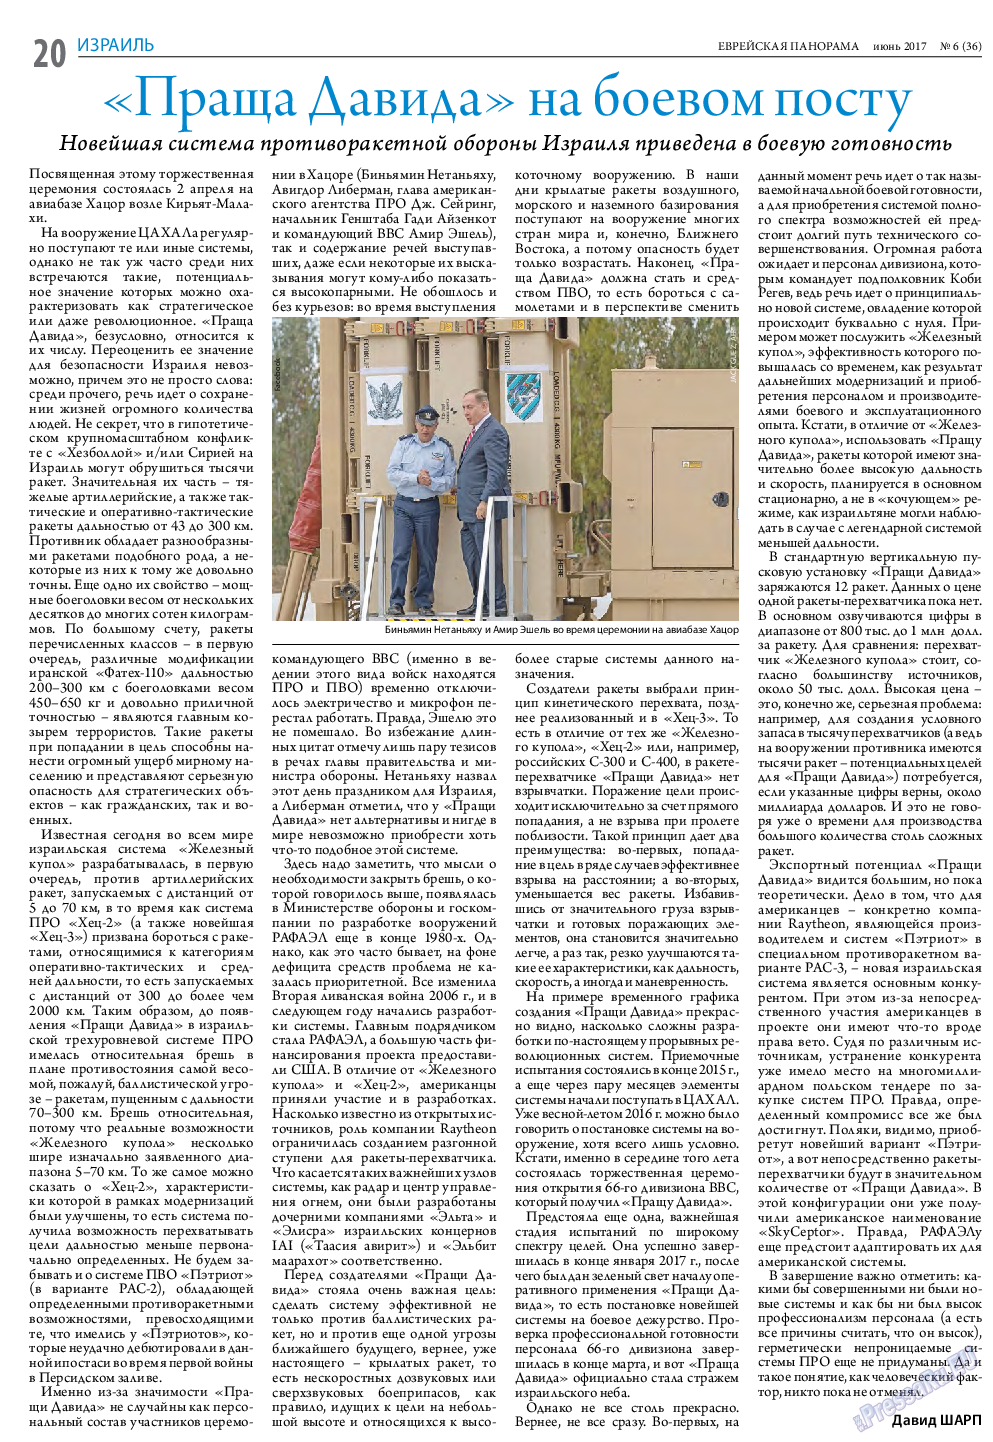 Еврейская панорама, газета. 2017 №6 стр.20